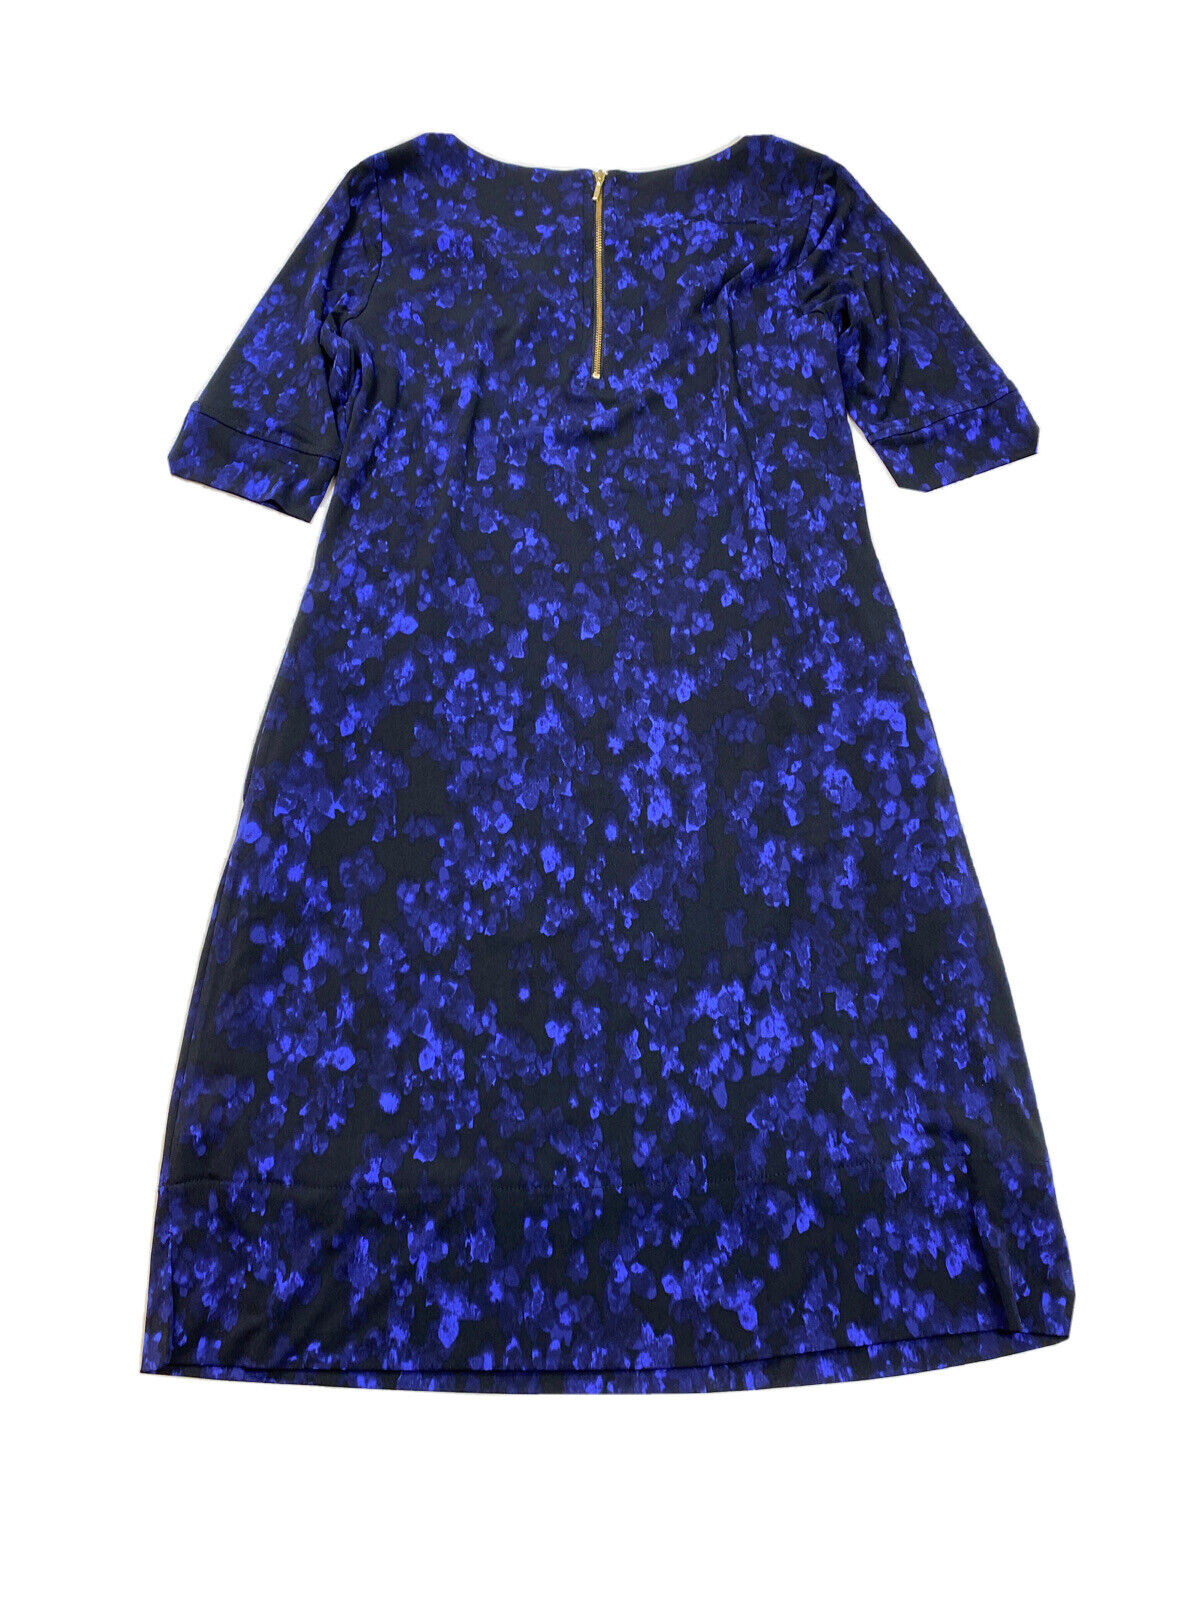 NEW Tahari Women's Black/Blue Short Sleeve Shift Dress W/ Pockets - 2